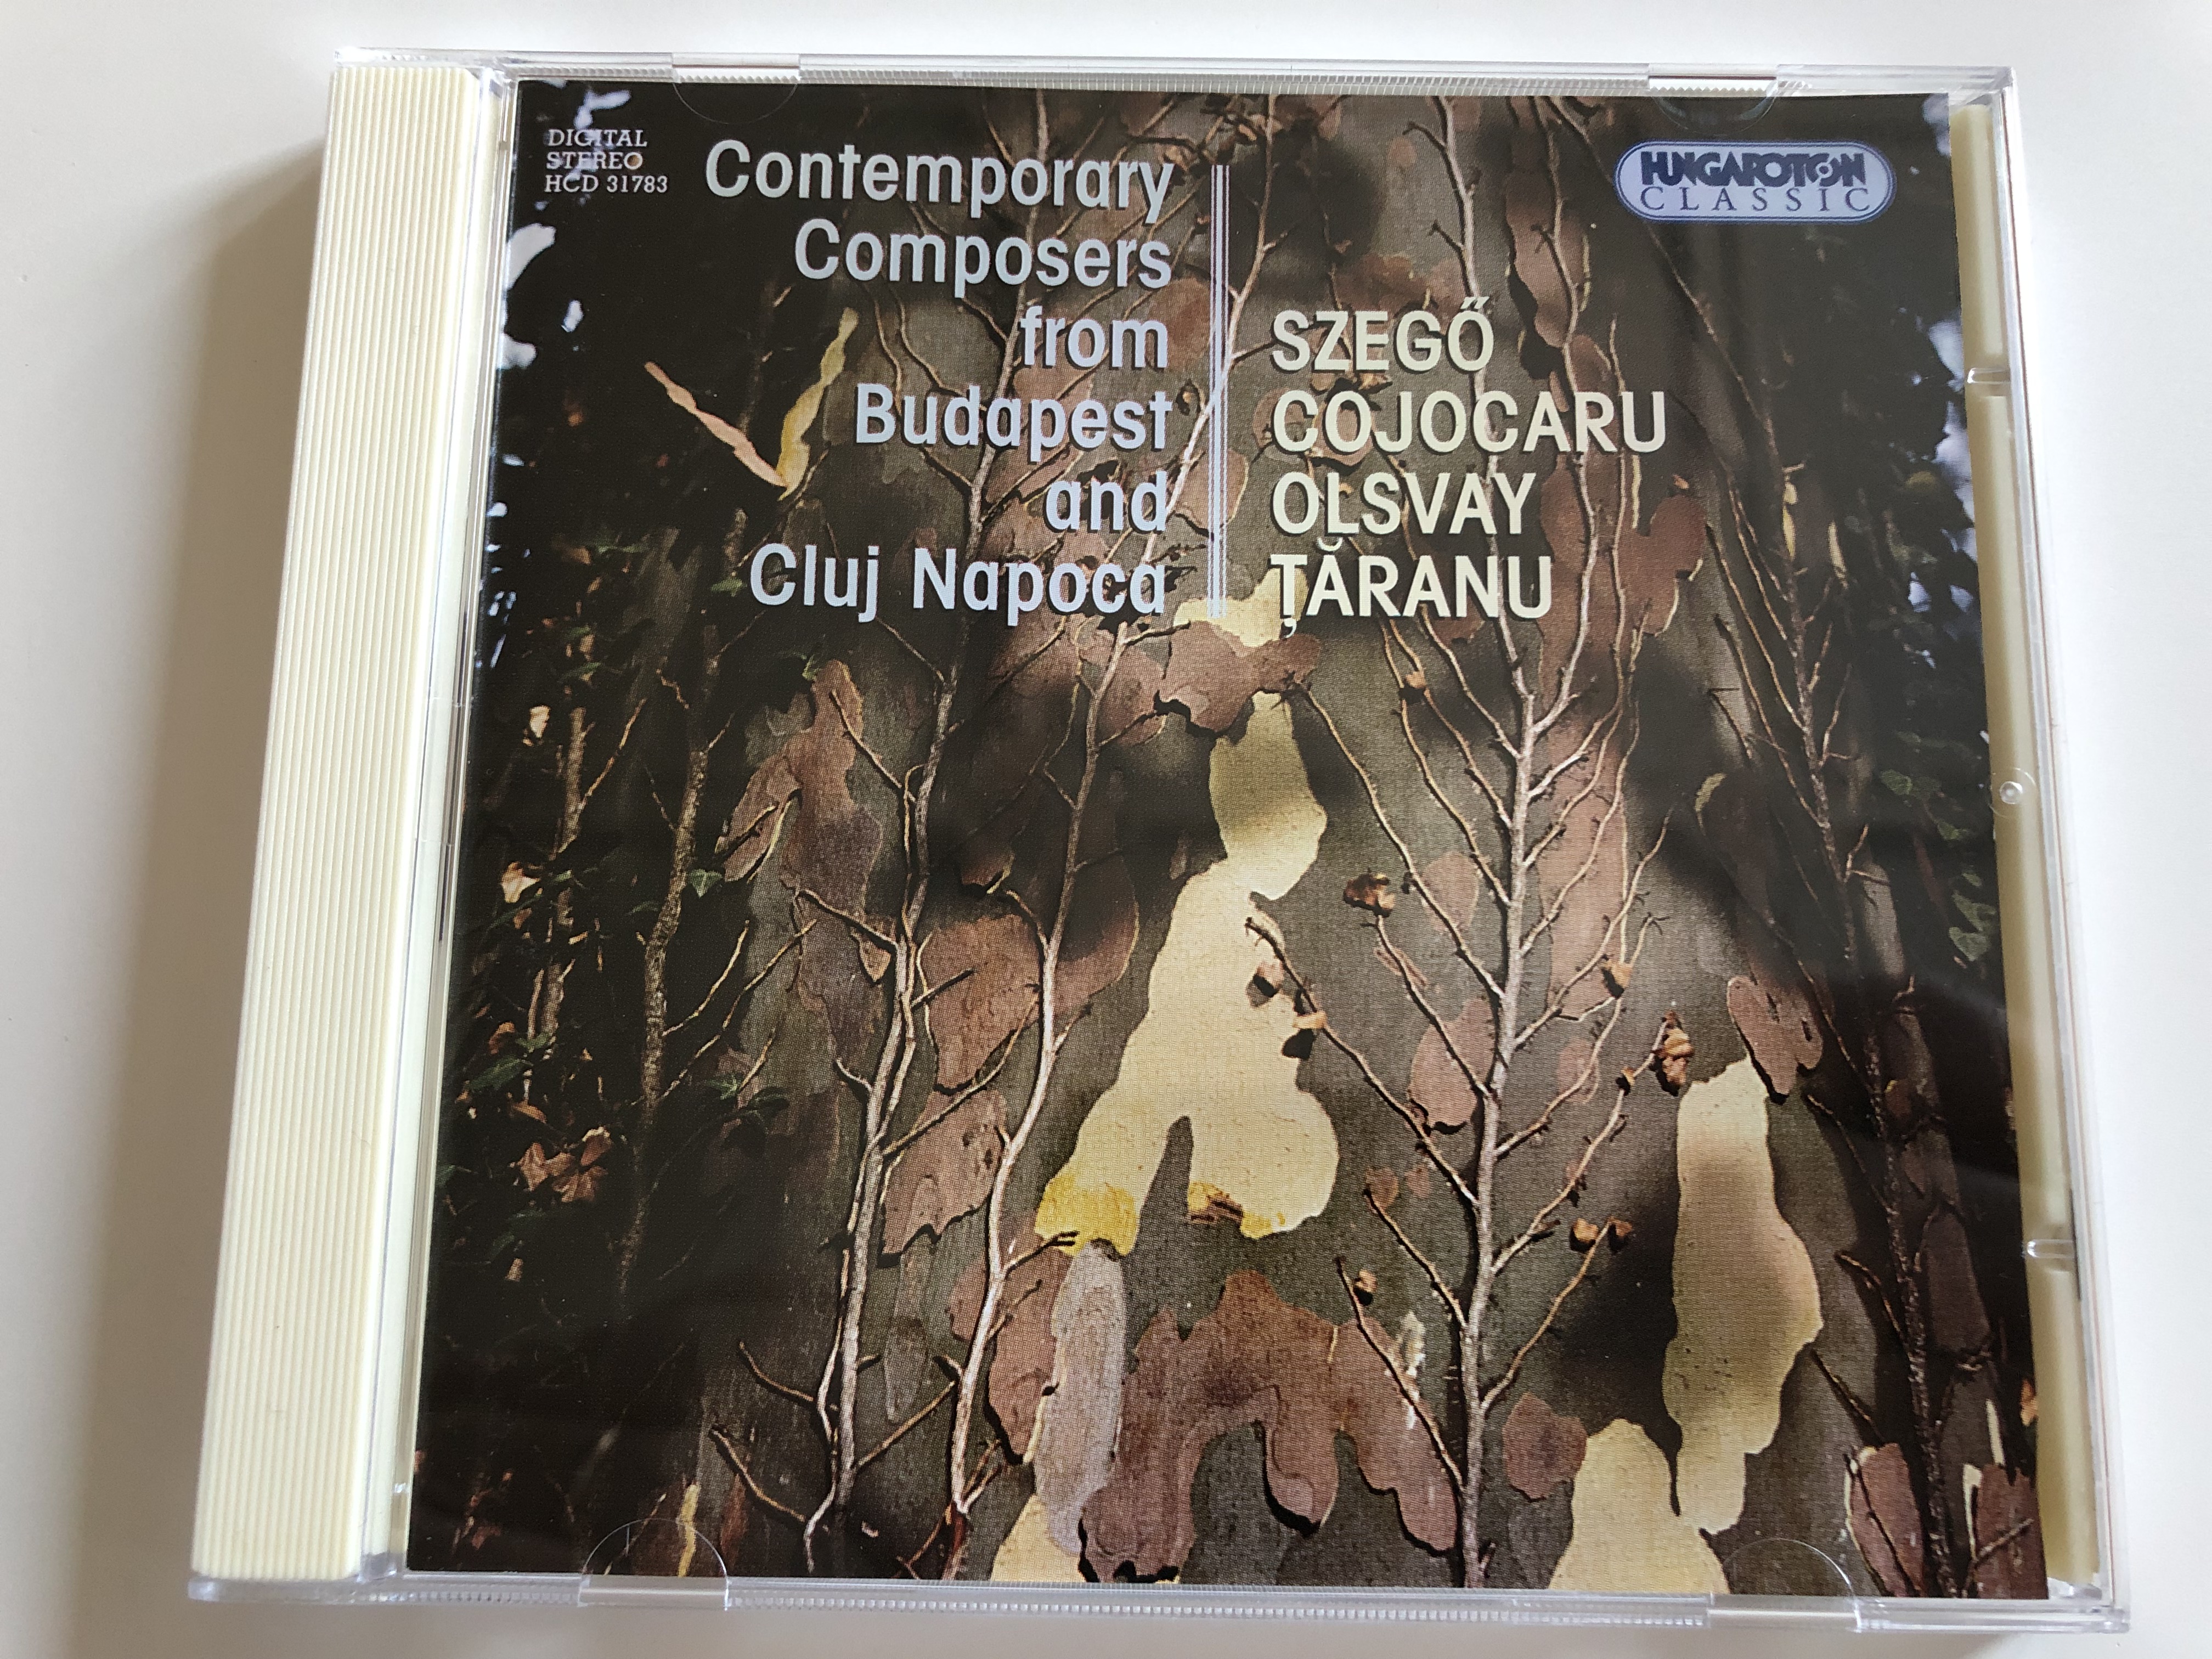 contemporary-composers-from-budapest-and-cluj-napoca-szeg-cojacaru-olsvay-ranu-hungaroton-classic-audio-cd-1998-stereo-hcd-31783-1-.jpg